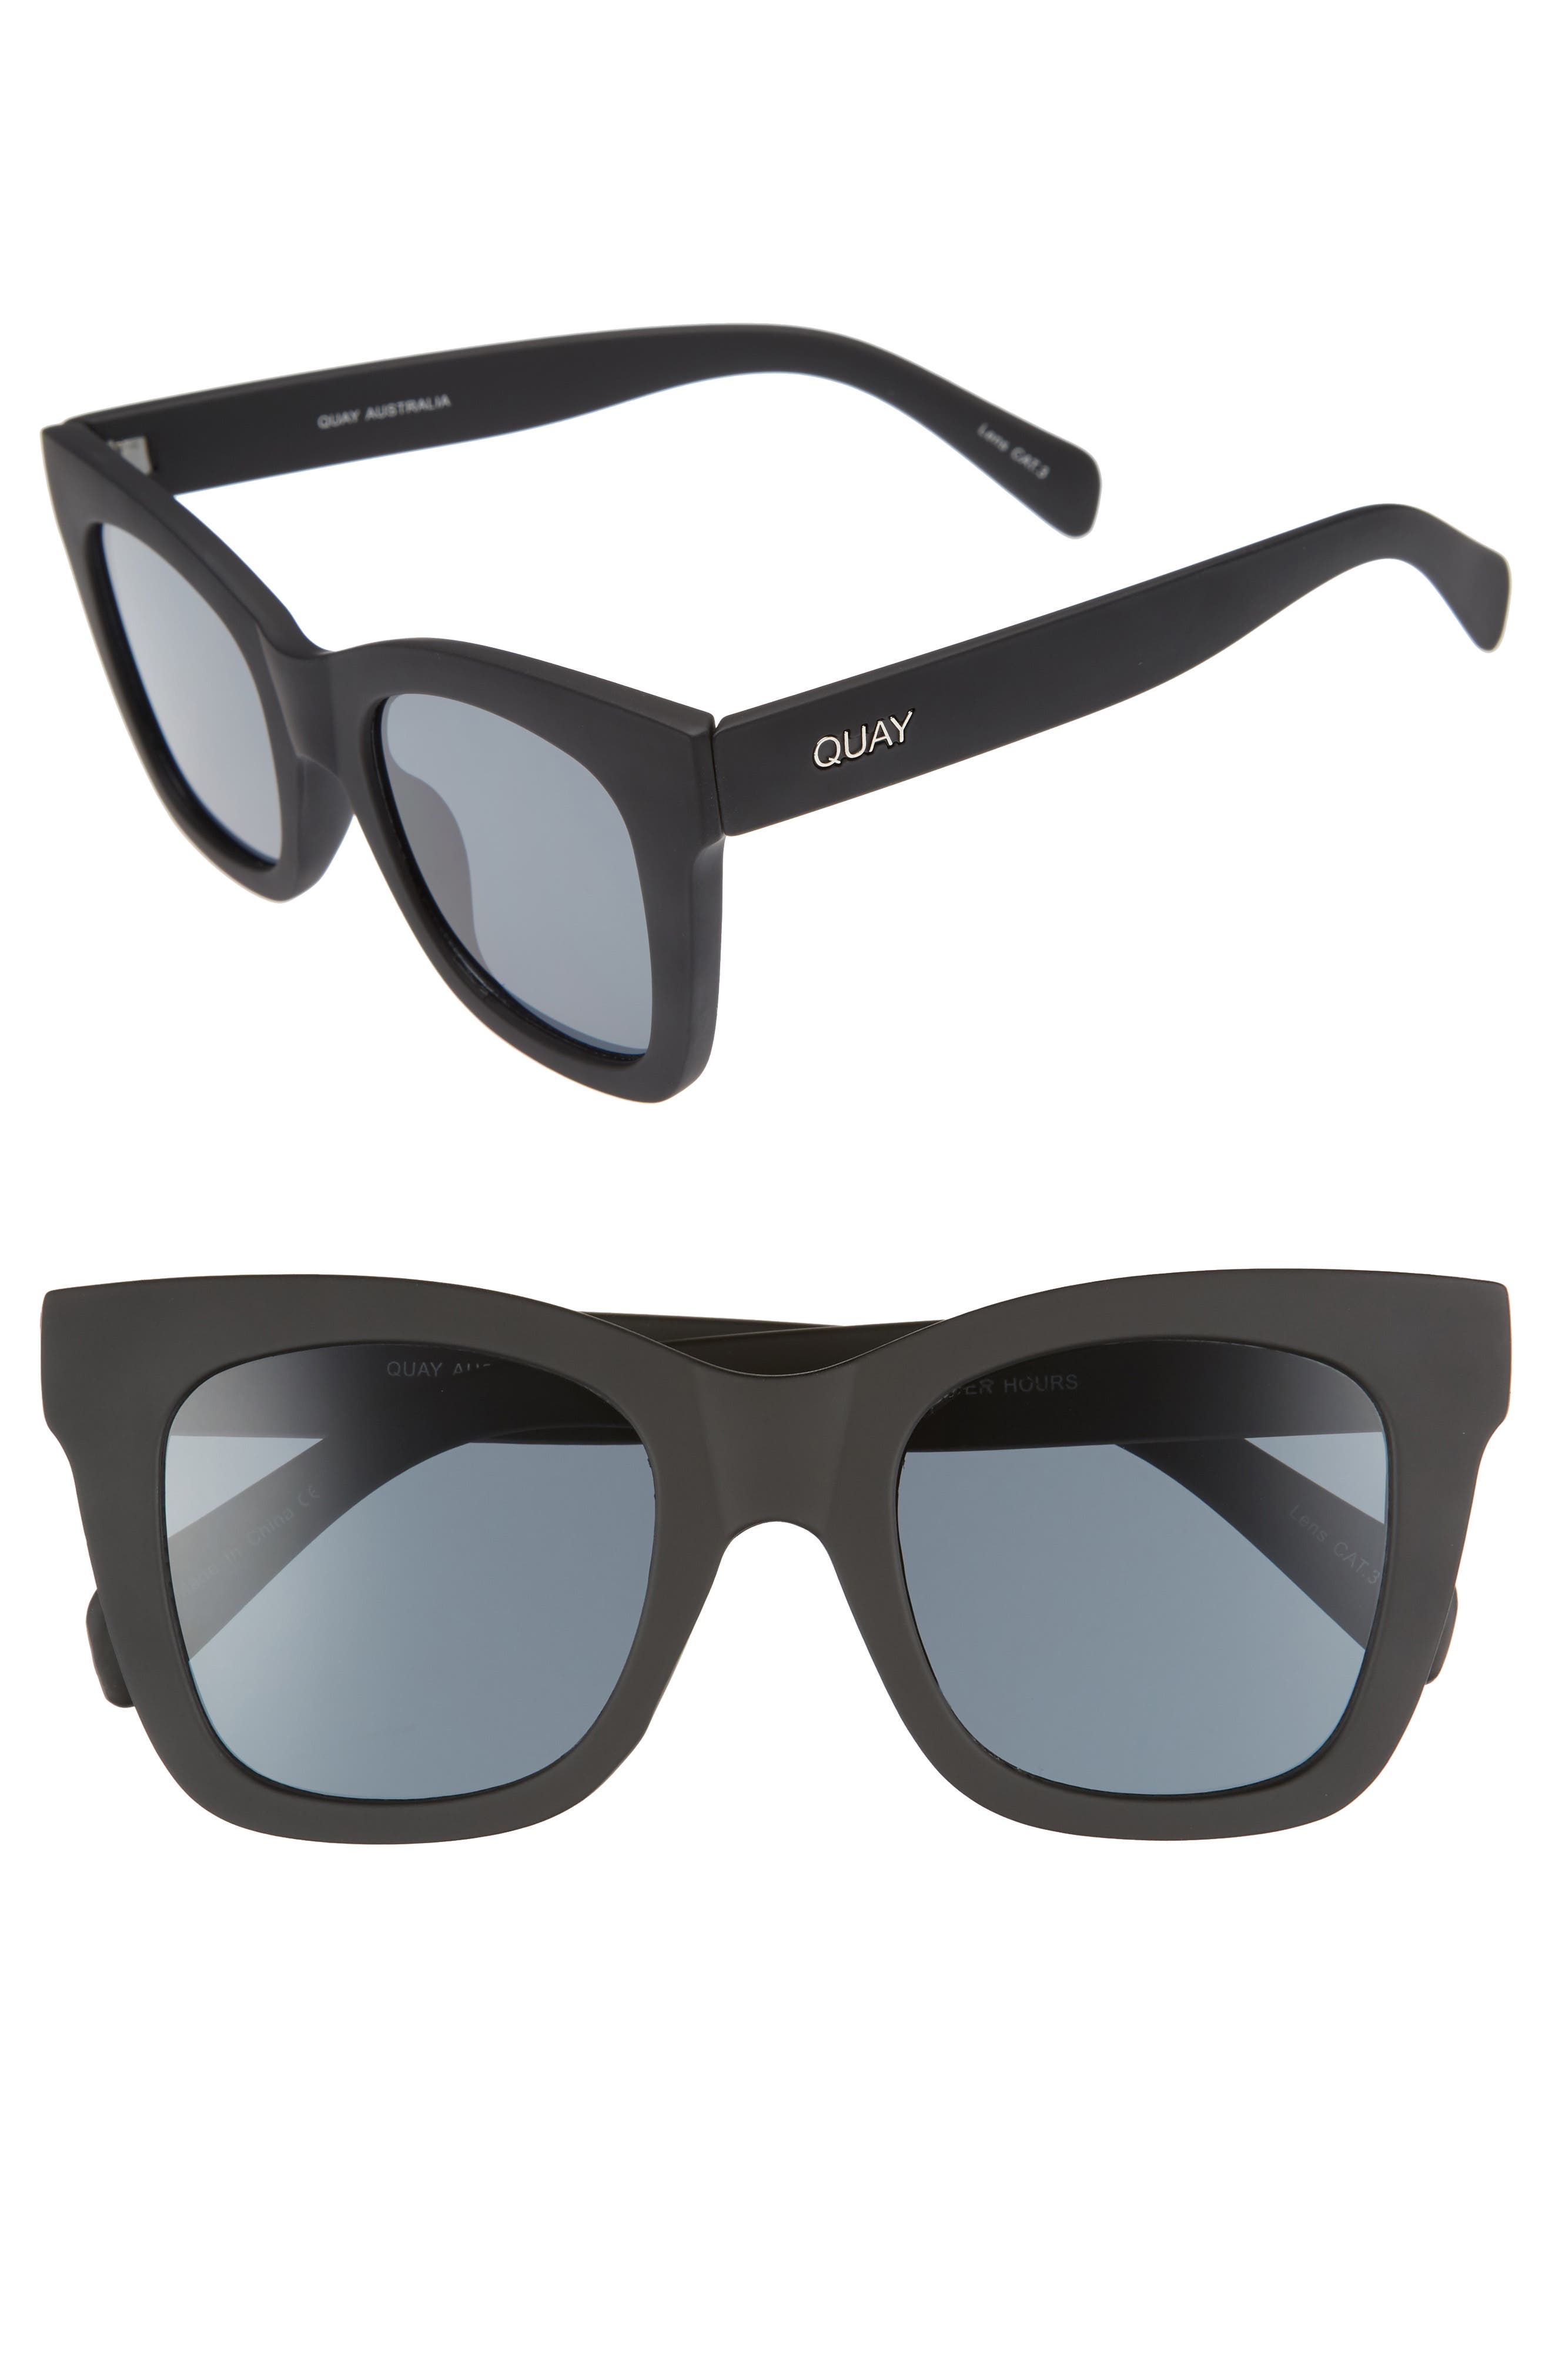 Womens California Classics Fashion Style 20210 Sunglasses with Smoke Lens